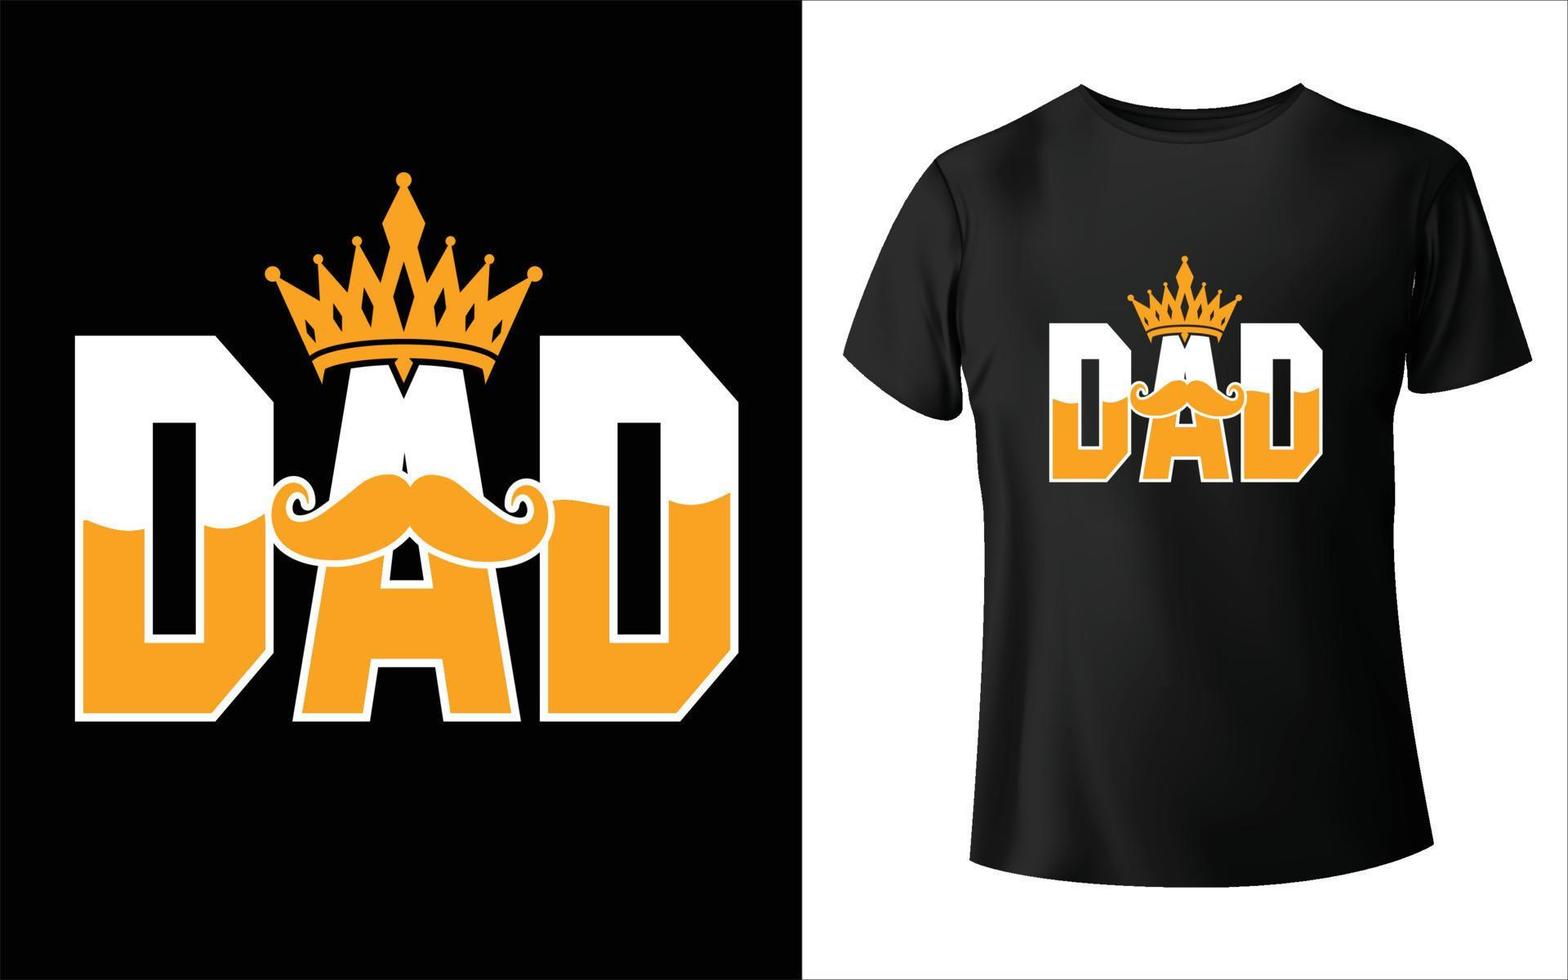 bästa pappa pappas t-shirt design vektor